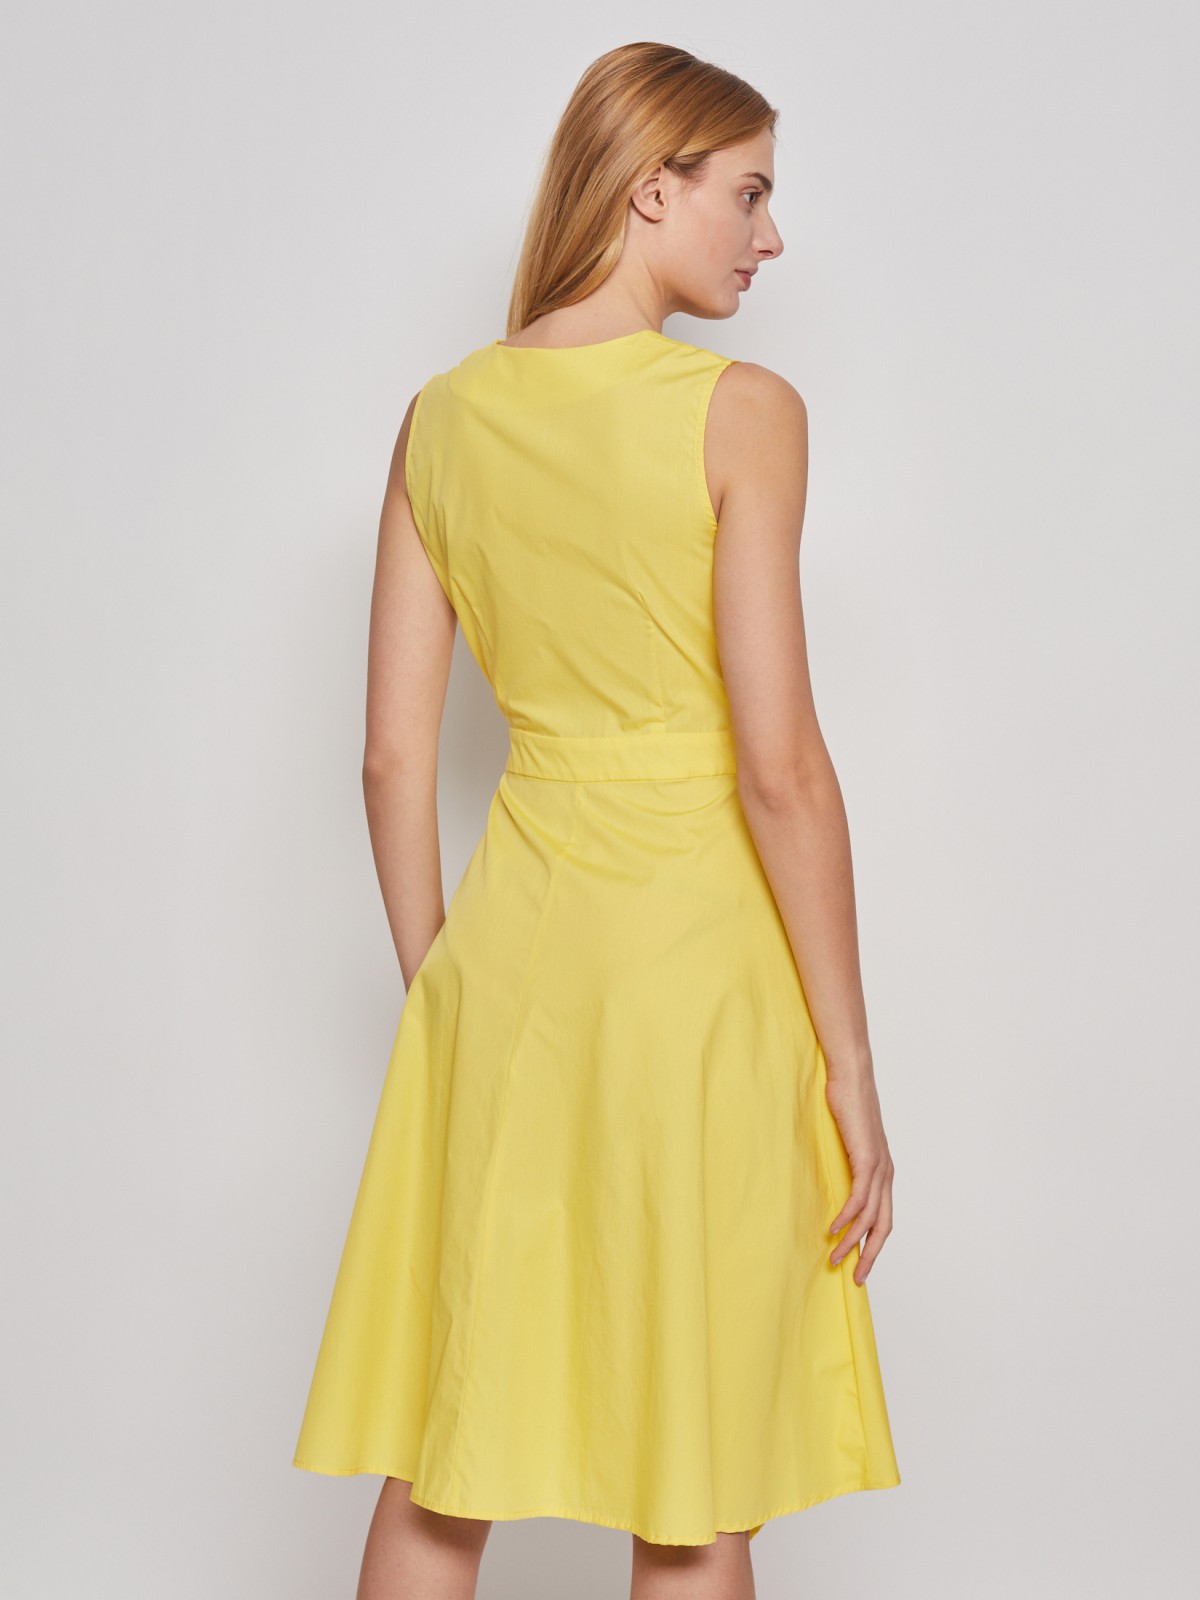 Платье zolla 022248239653, цвет желтый, размер XS - фото 6